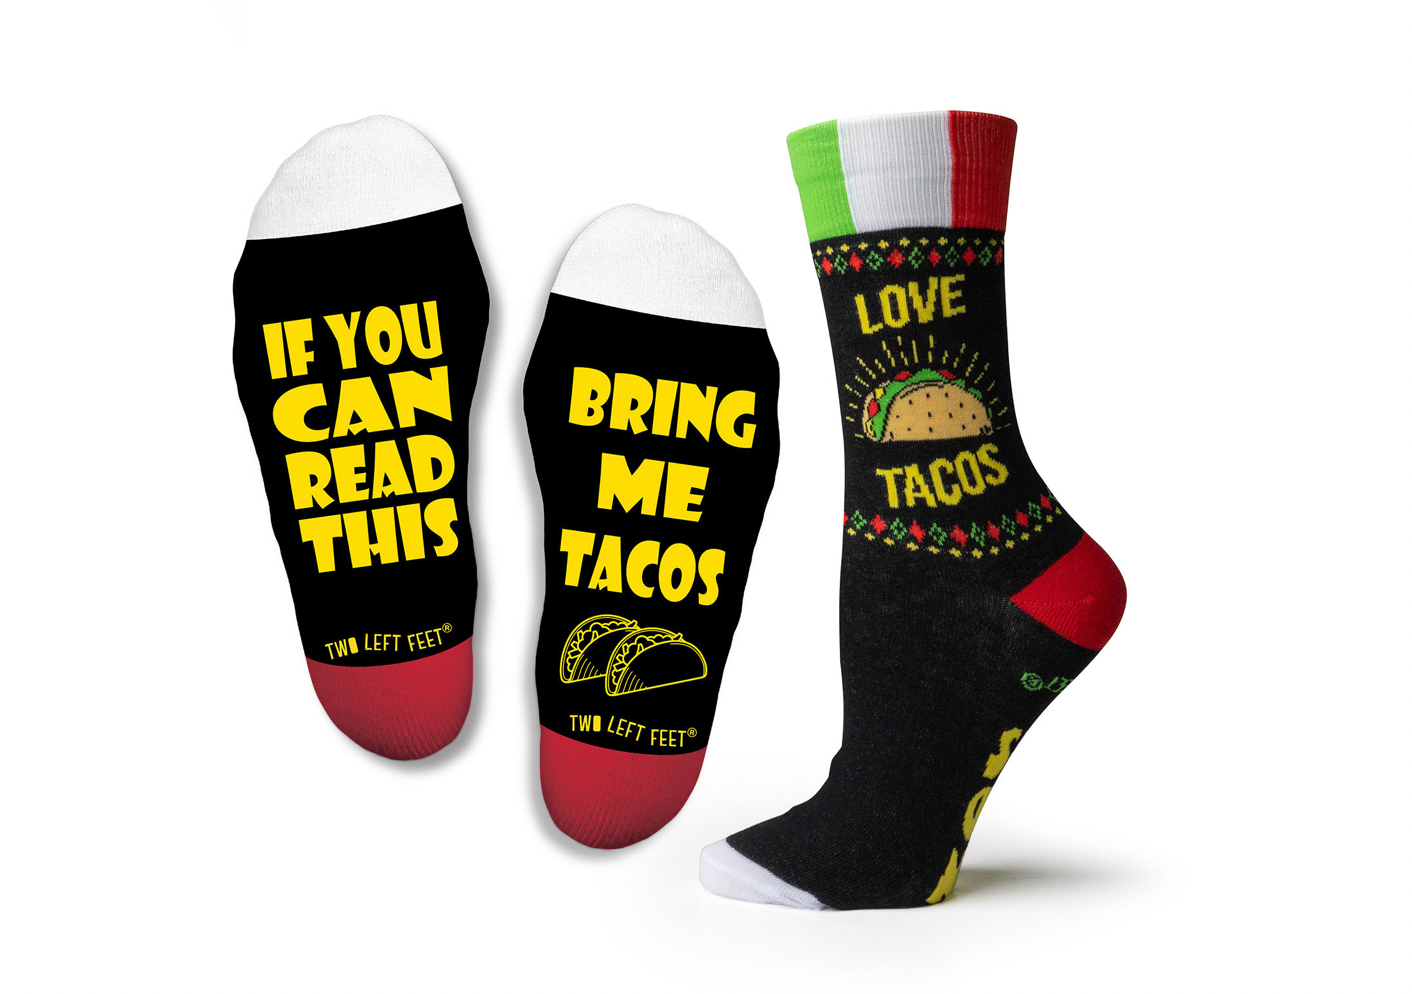 Bring Me Tacos Socks